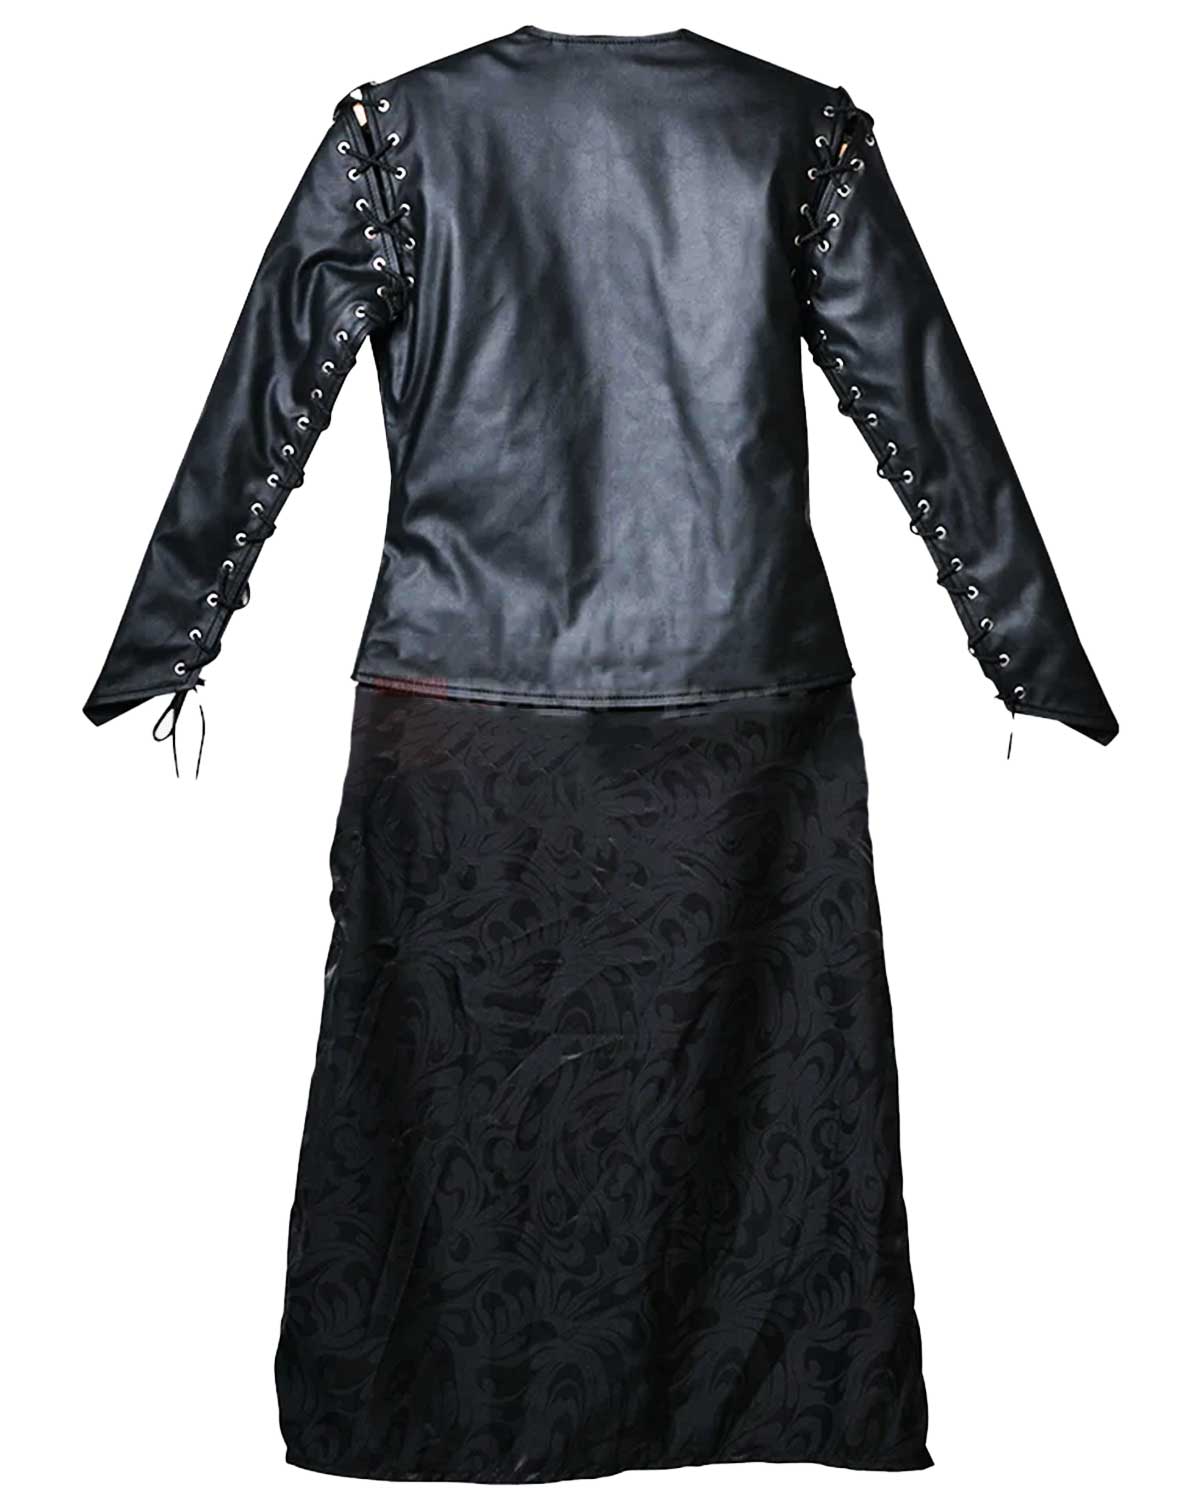 Bellatrix Lestrange Harry Potter Halloween Costume | Elite Jacket